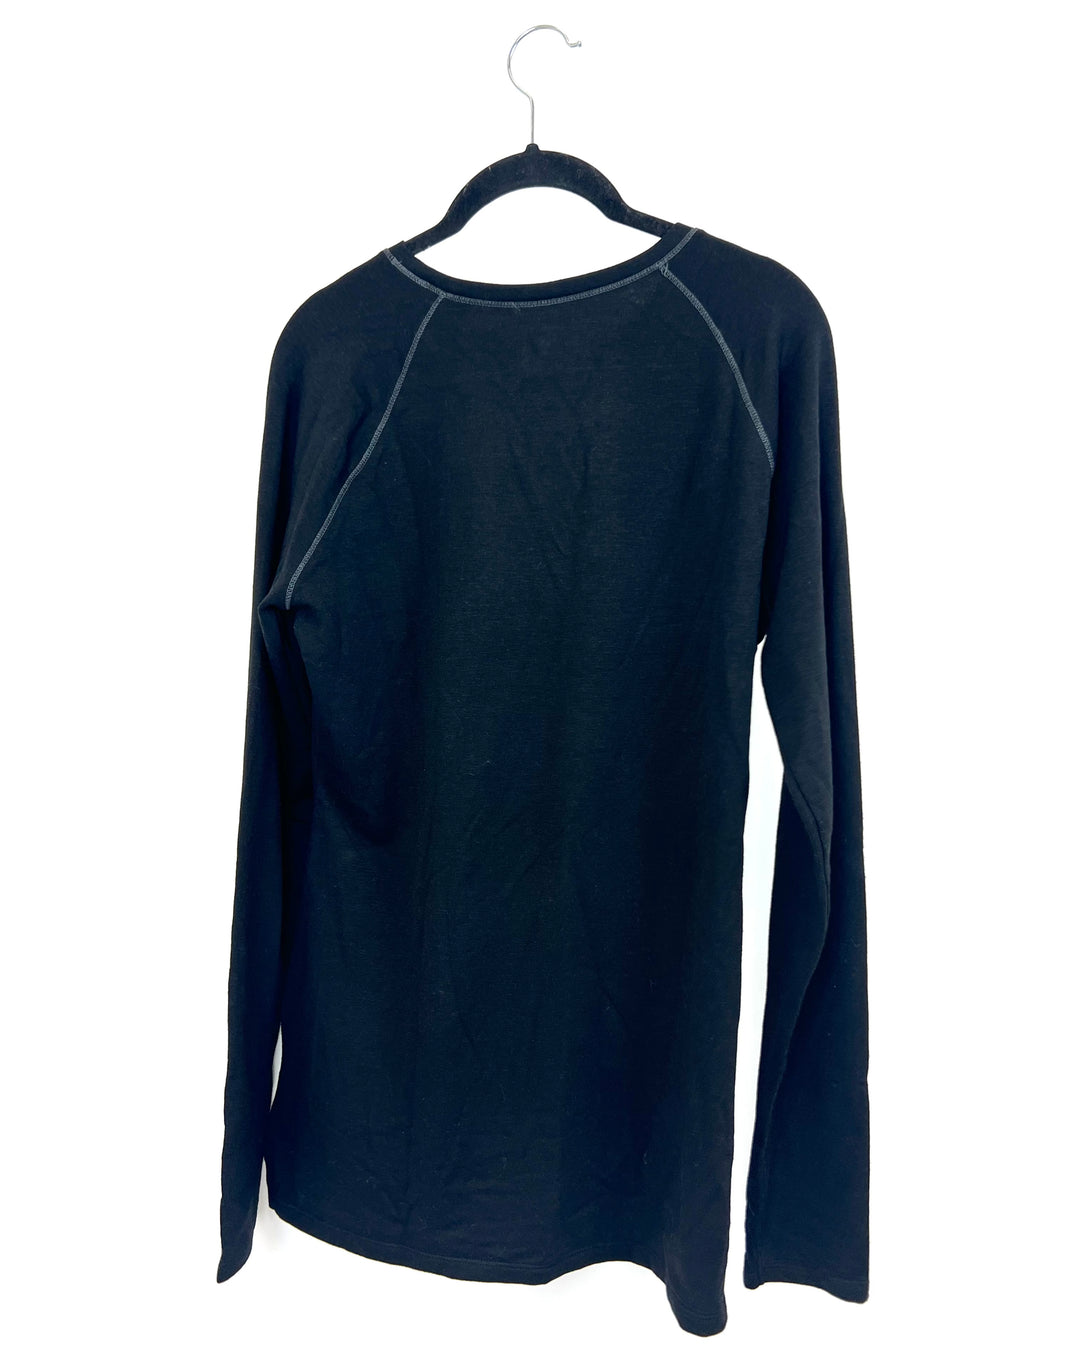 Black Long Sleeve Top - Size 10/12